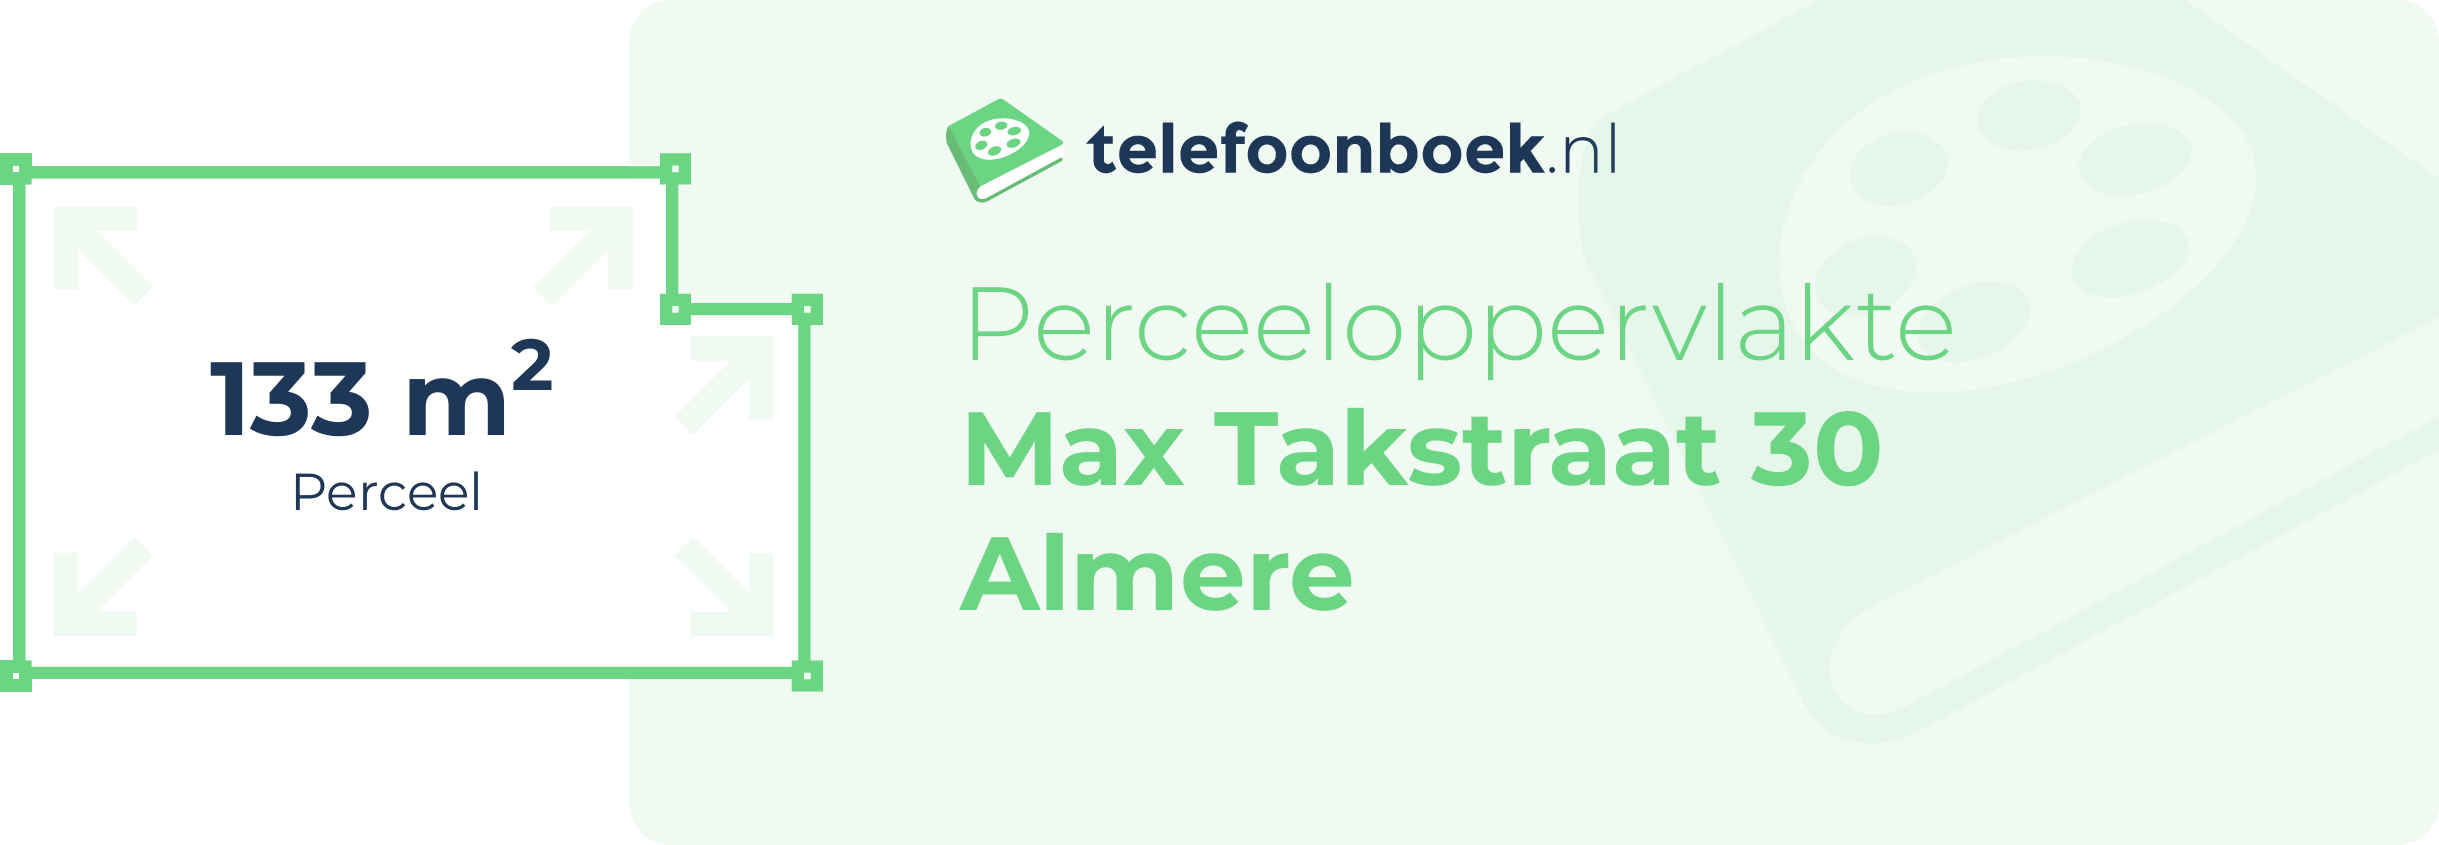 Perceeloppervlakte Max Takstraat 30 Almere